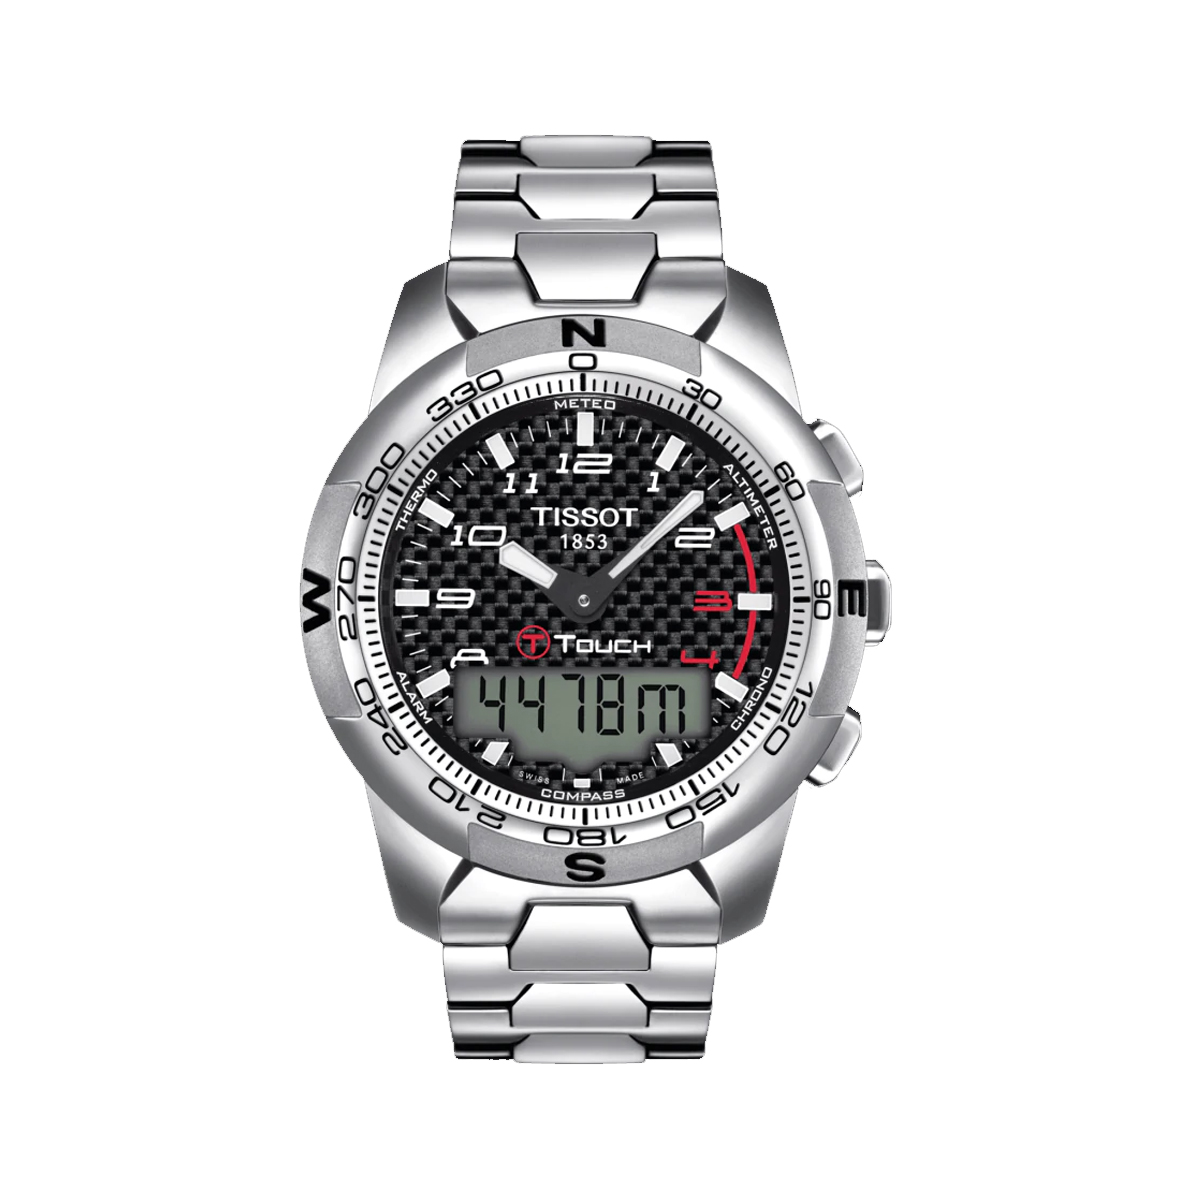 Titanium Tissot T-Touch II Multifunction Watch